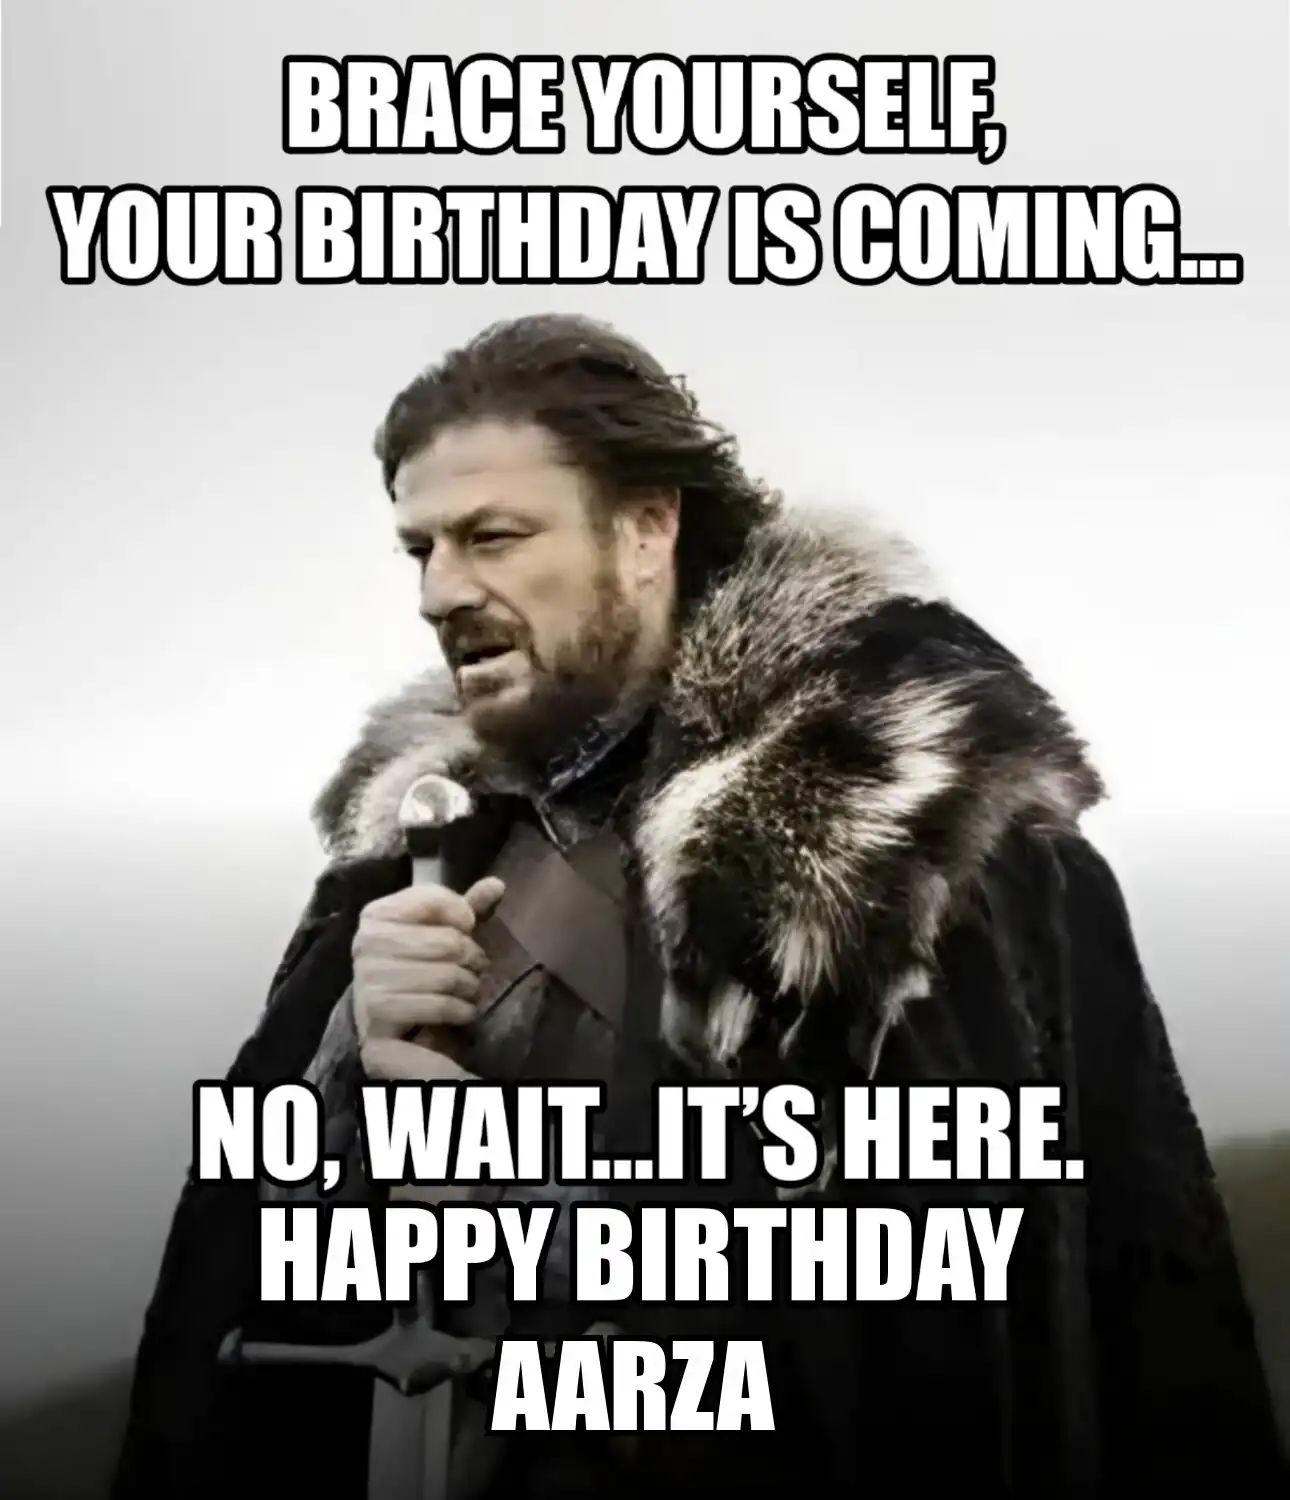 Happy Birthday Aarza Brace Yourself Your Birthday Is Coming Meme